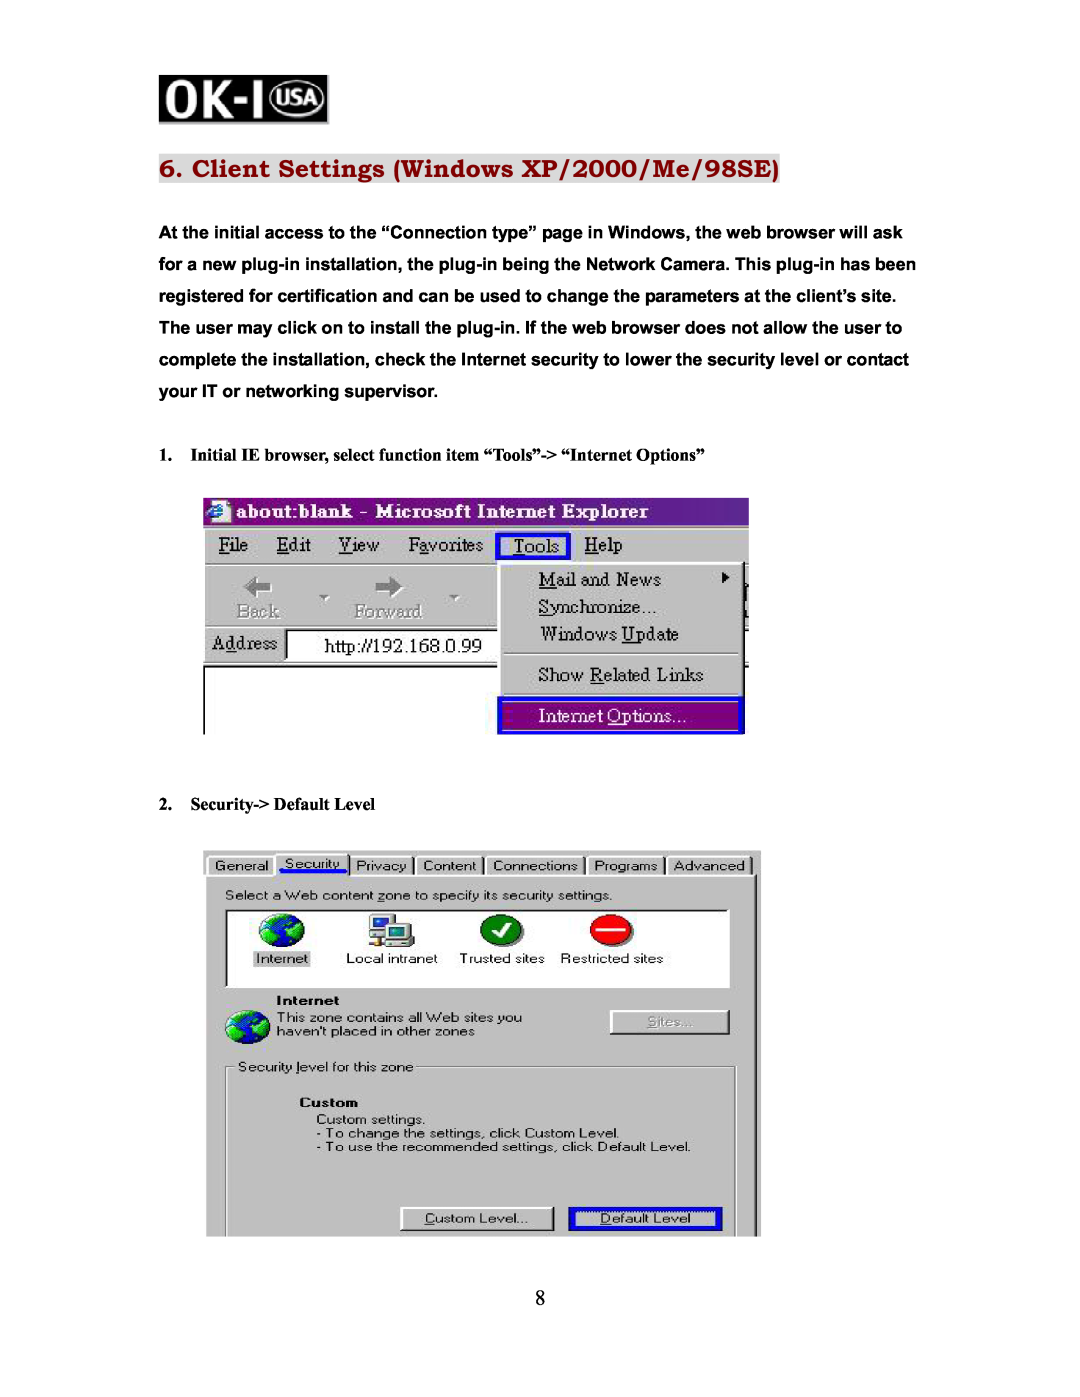 Oki OK-NIP10-A420P, OK-NIP10-A420GP user manual Client Settings Windows XP/2000/Me/98SE, Security- Default Level 